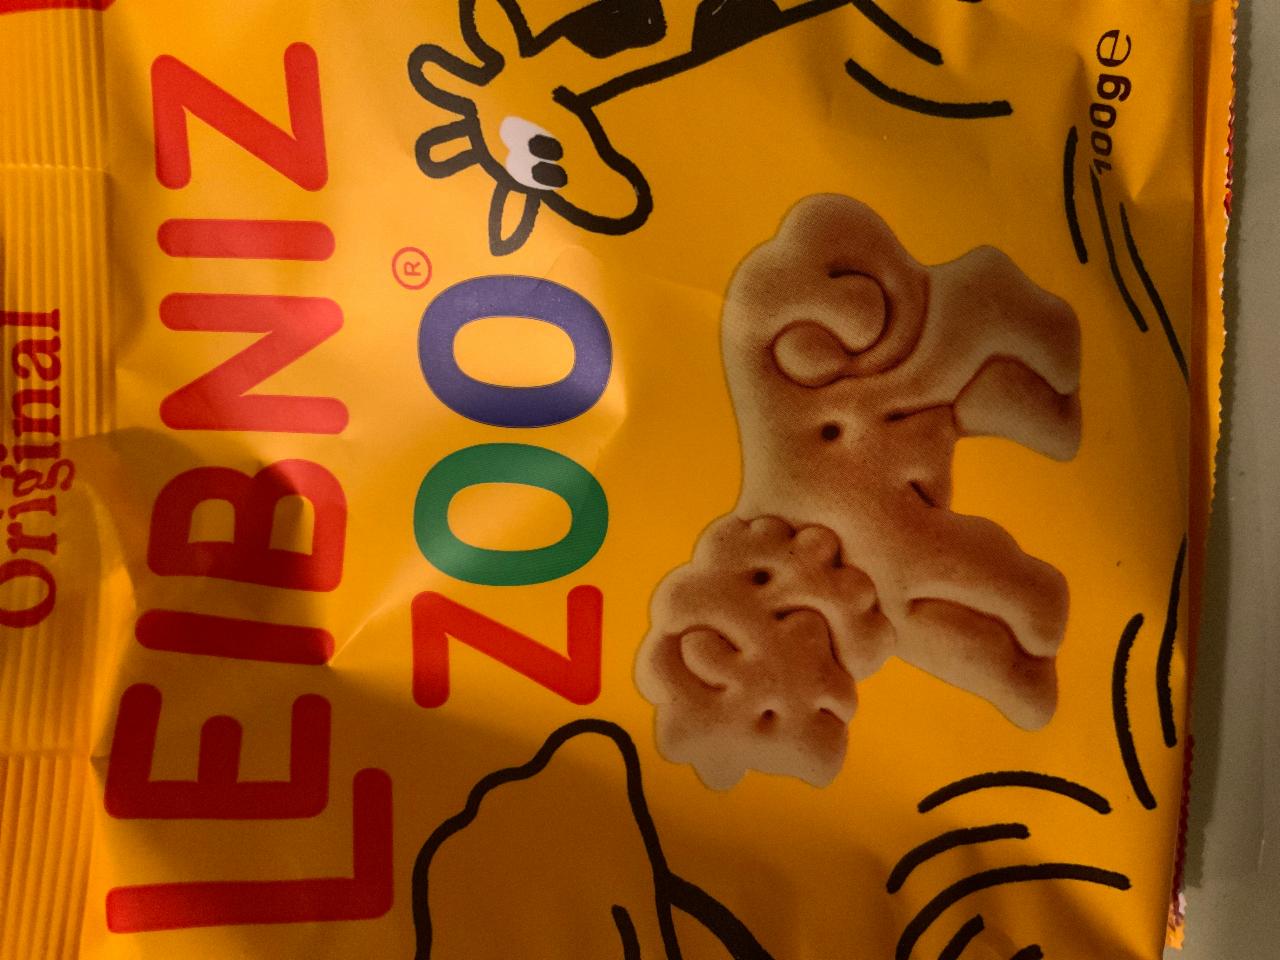 Фото - Печиво у формі тваринок Zoo Leibniz Bahlsen